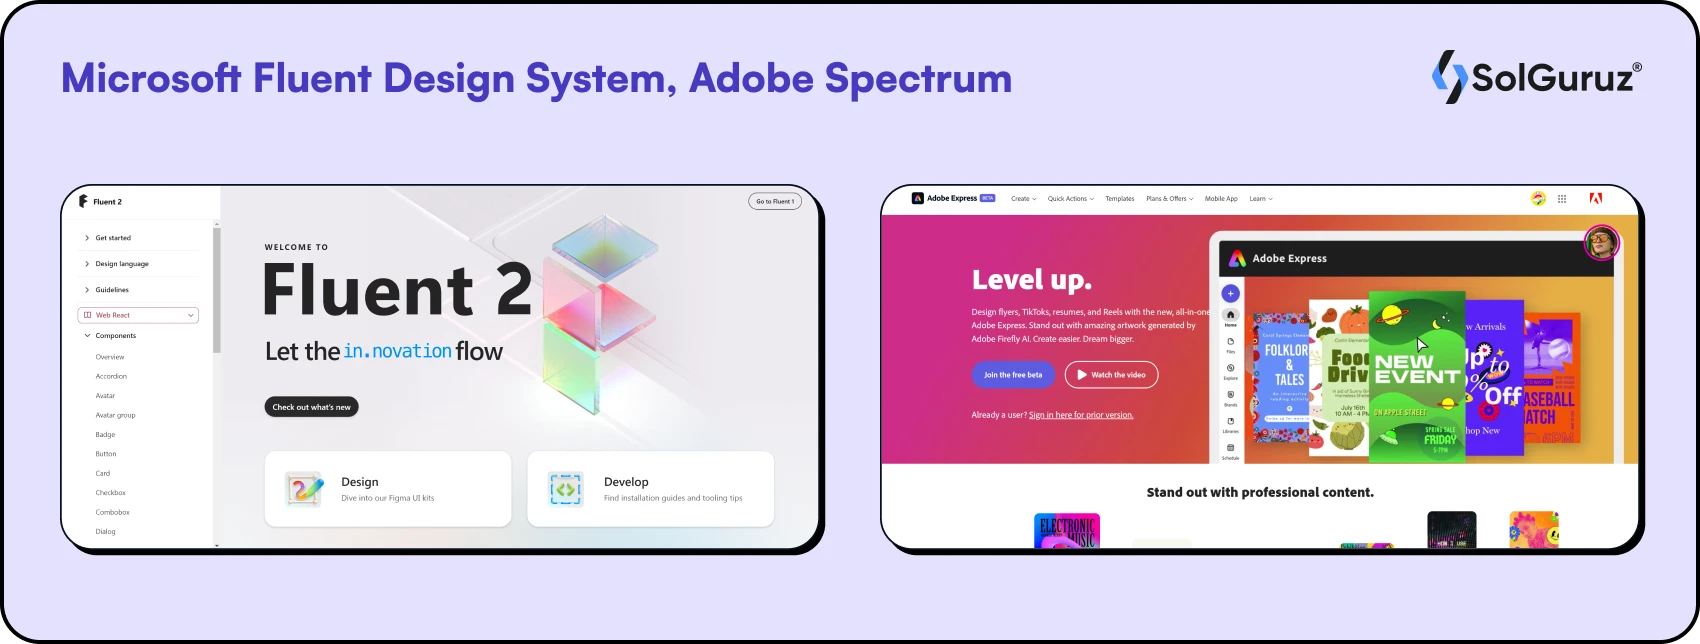 Microsoft Fluent Design System, Adobe Spectrum